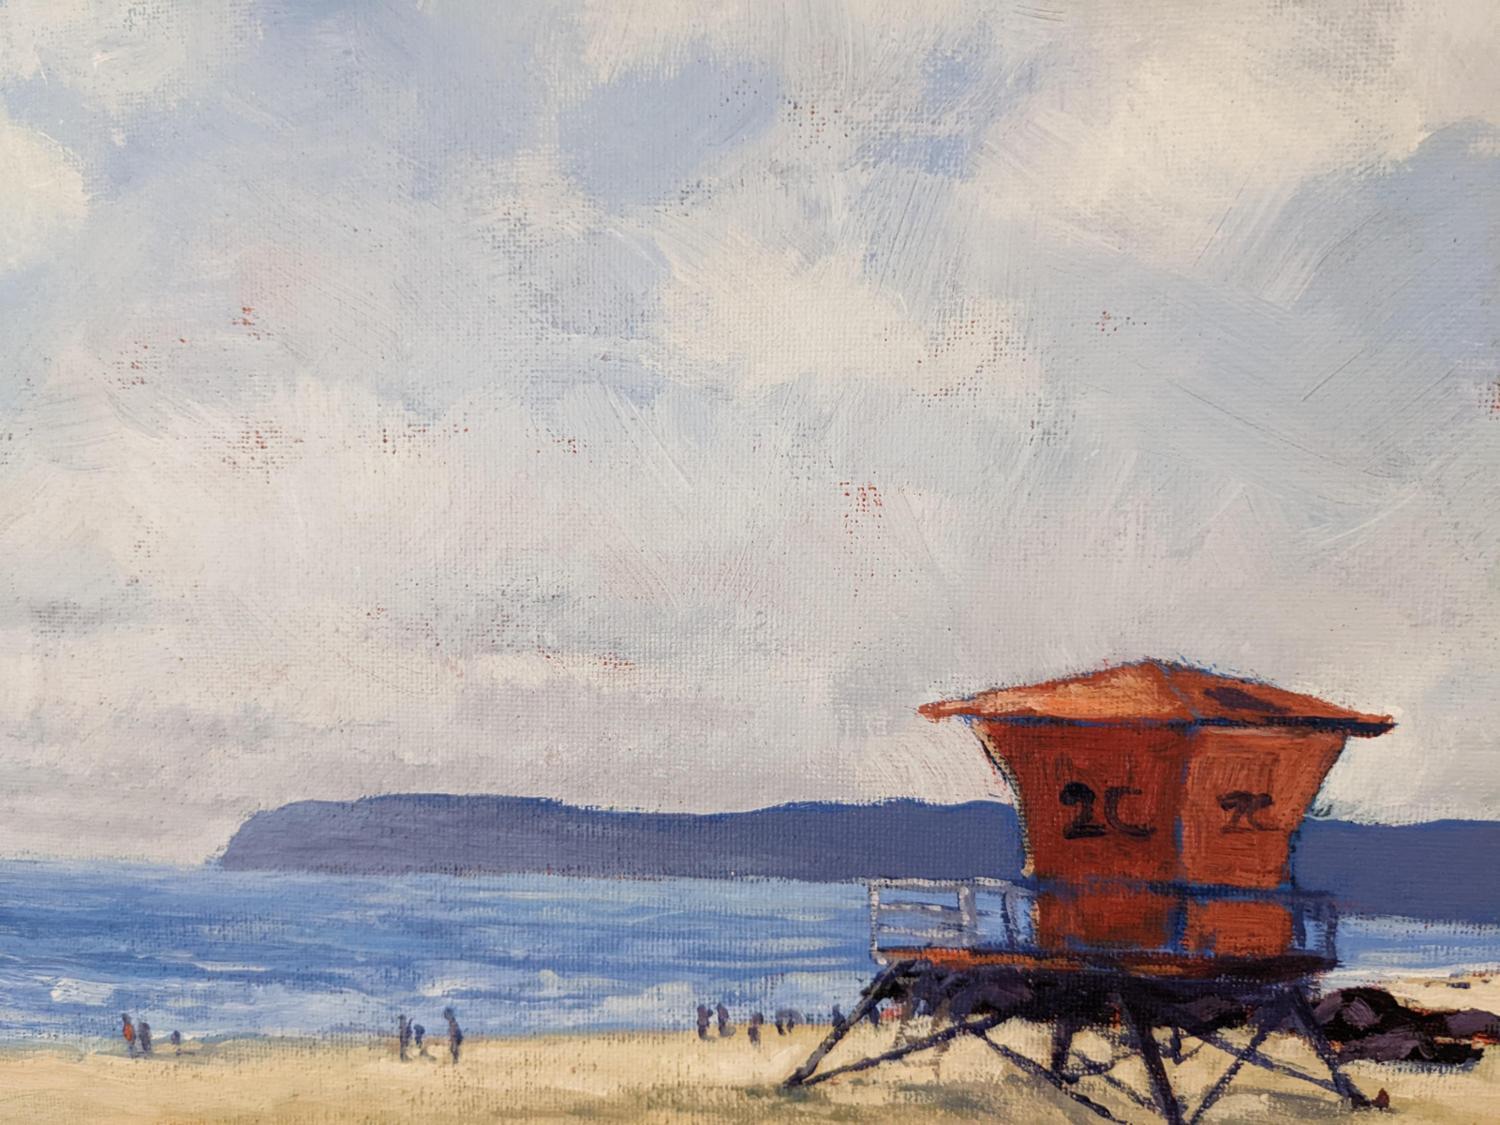 Sunny Coronado Beach and Lifeguard Tower, Original Painting - Abstract Impressionist Art by Samuel Pretorius